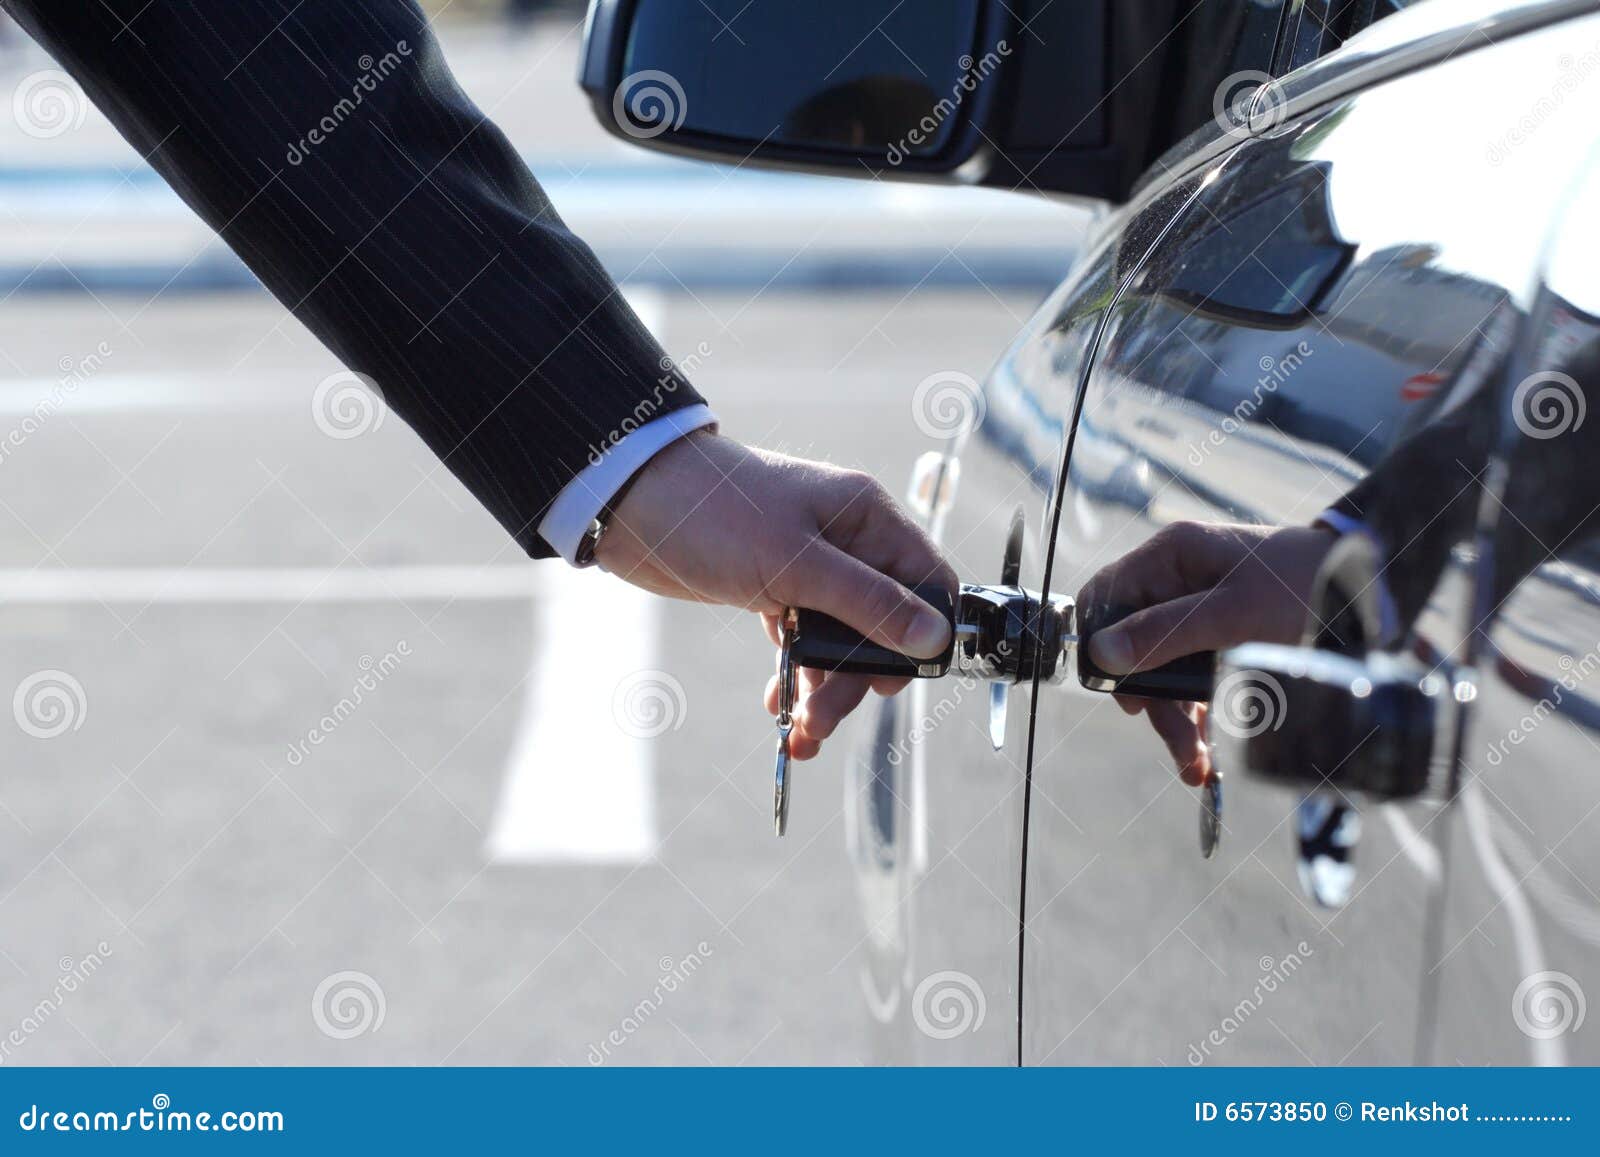 person inserting car key